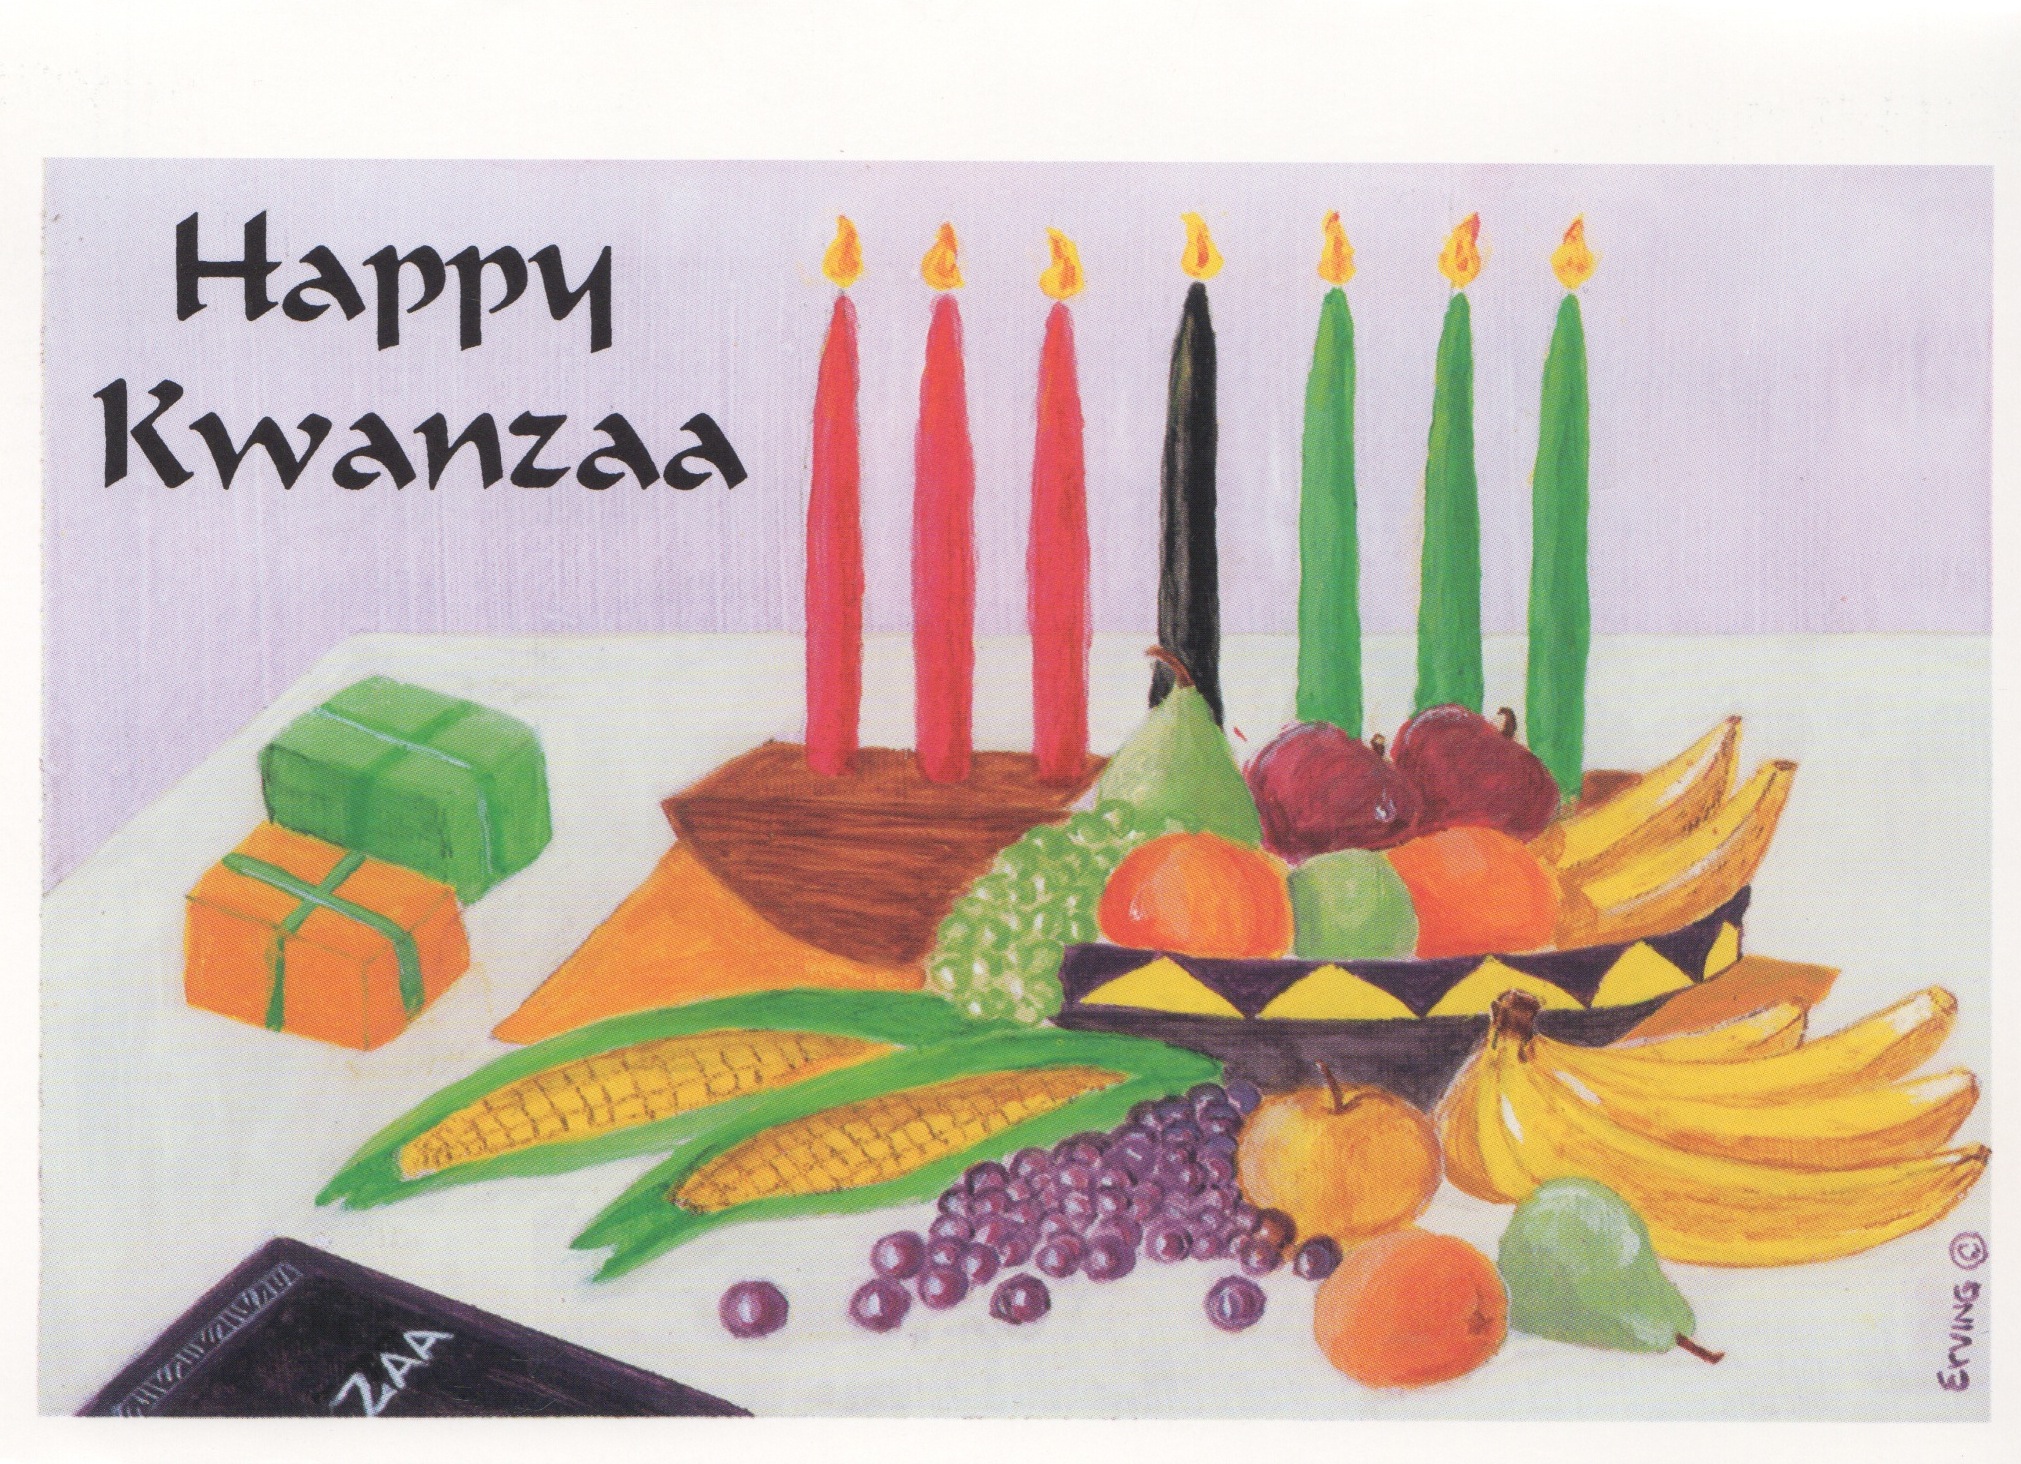 kwanzaa-card-the-gifts-jonmar-greeting-cards